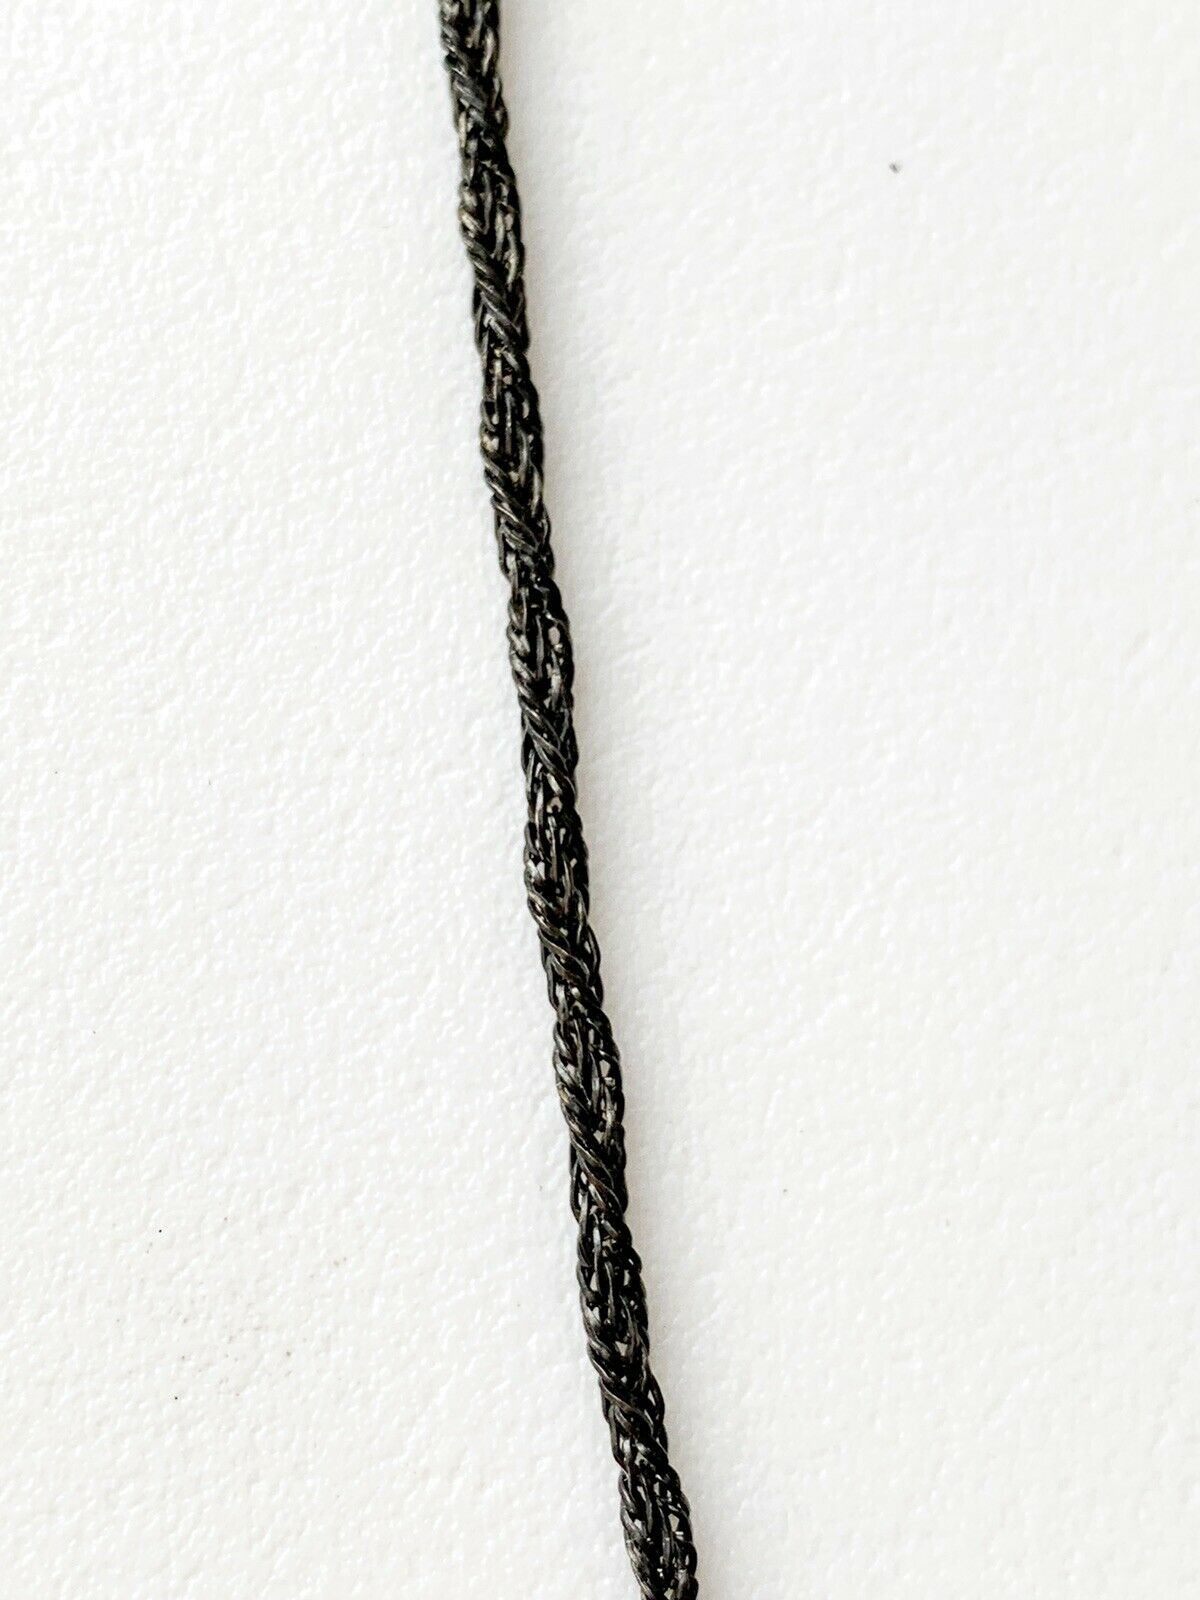 Yves Saint Laurent Broken Heart Rhinestones Necklace Vintage Black